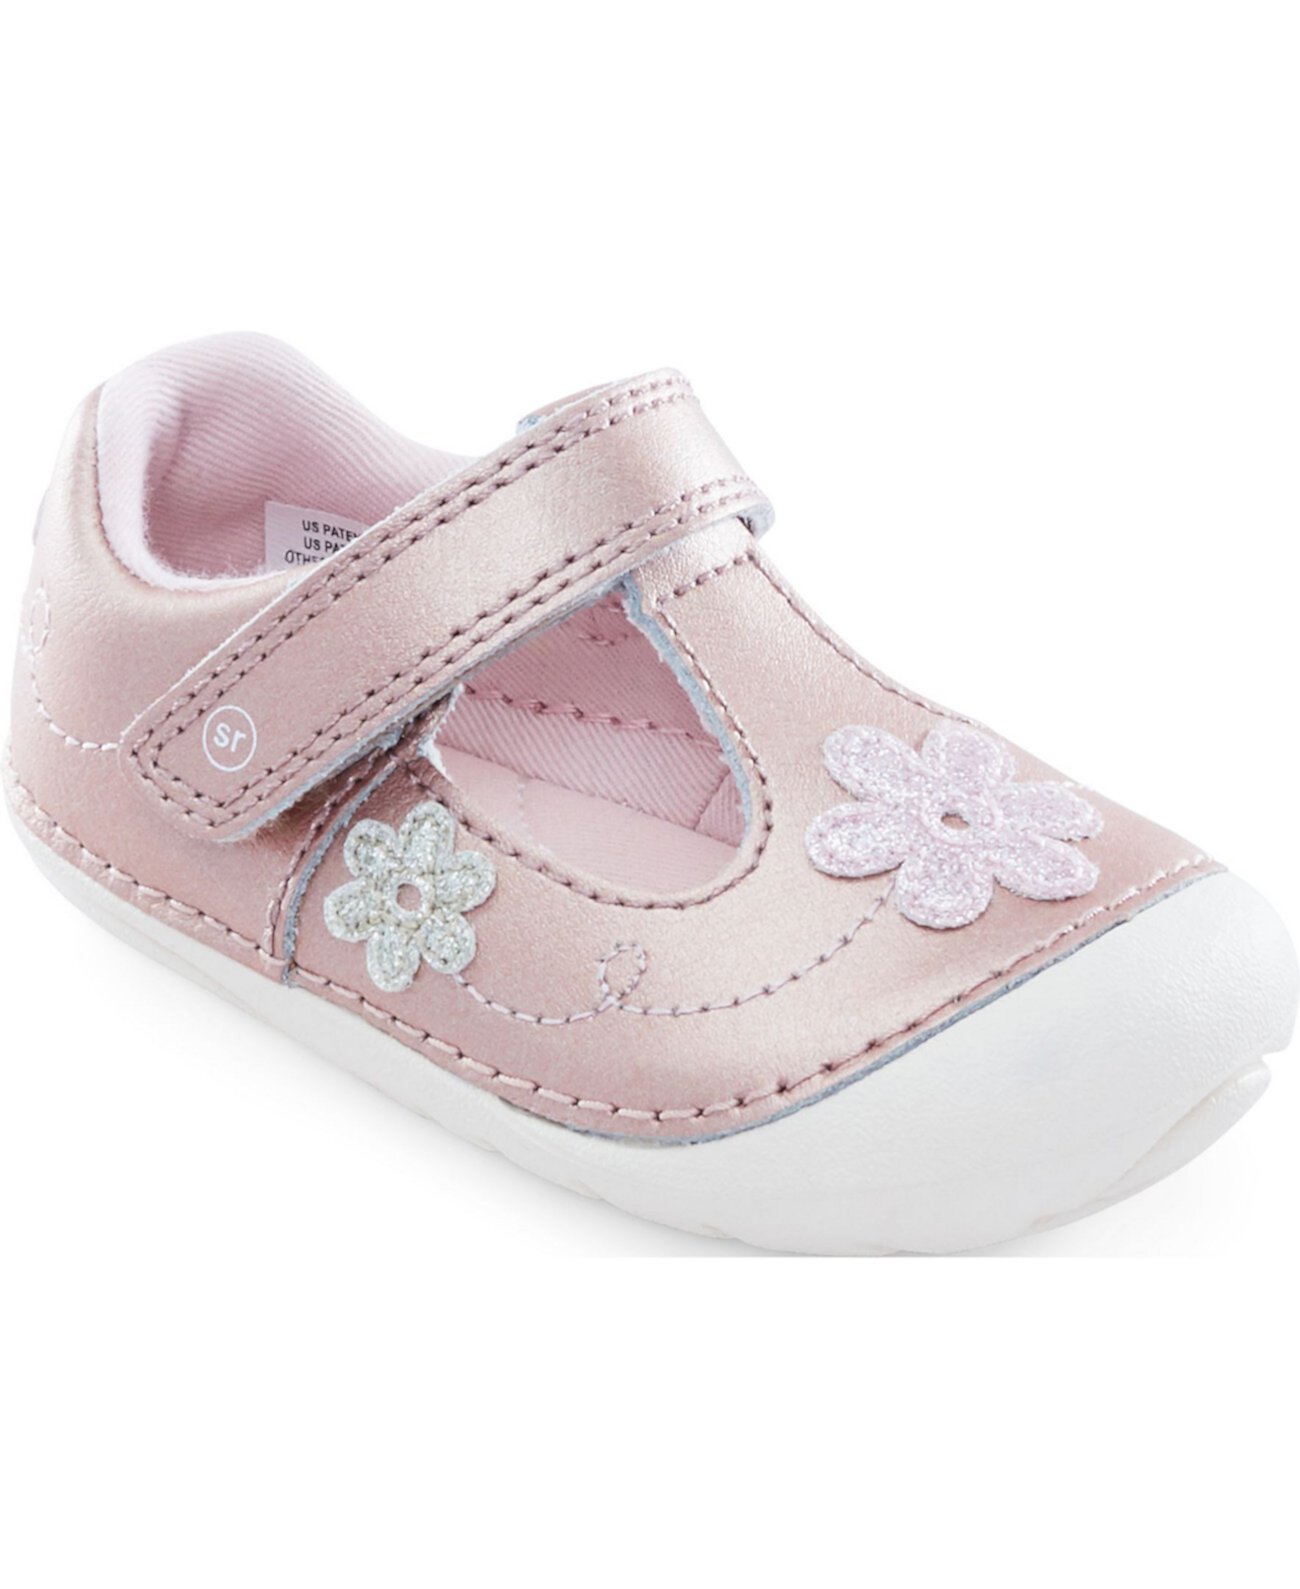 Обувь для маленьких девочек Soft Motion Liliana Mary Jane Stride Rite